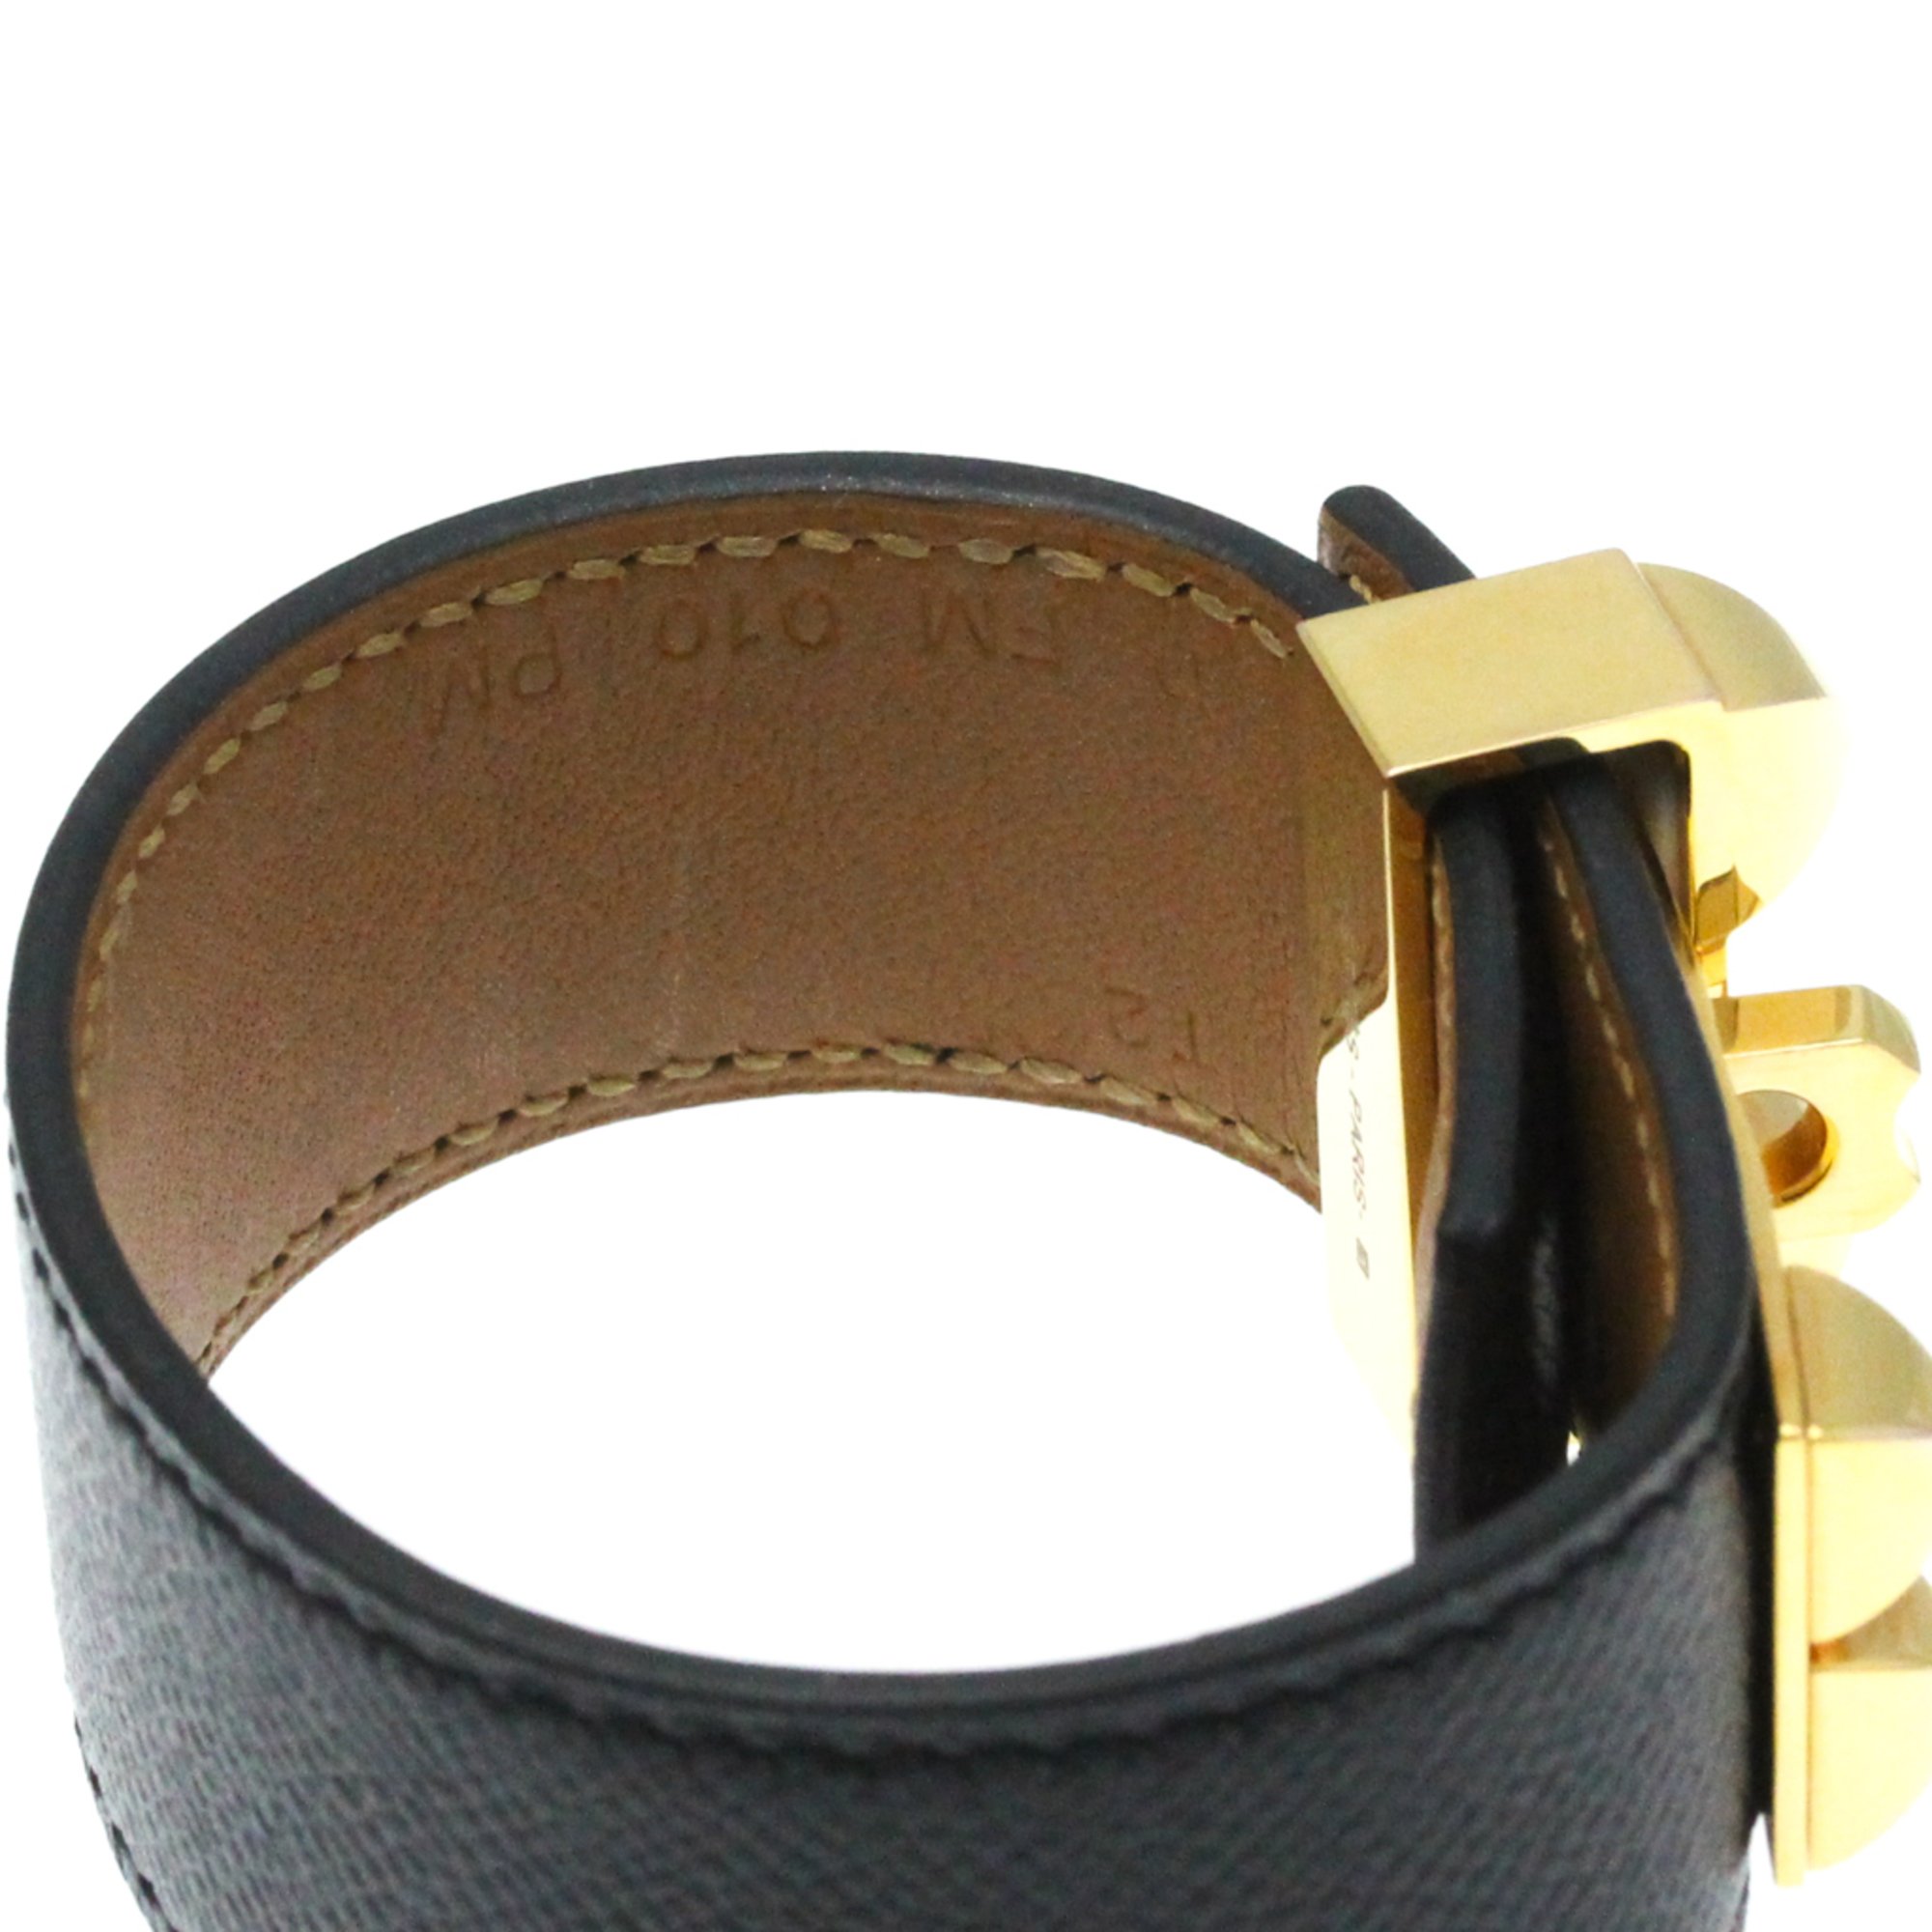 Hermes Collier De Chien Leather,Metal No Stone Bangle Black,Gold